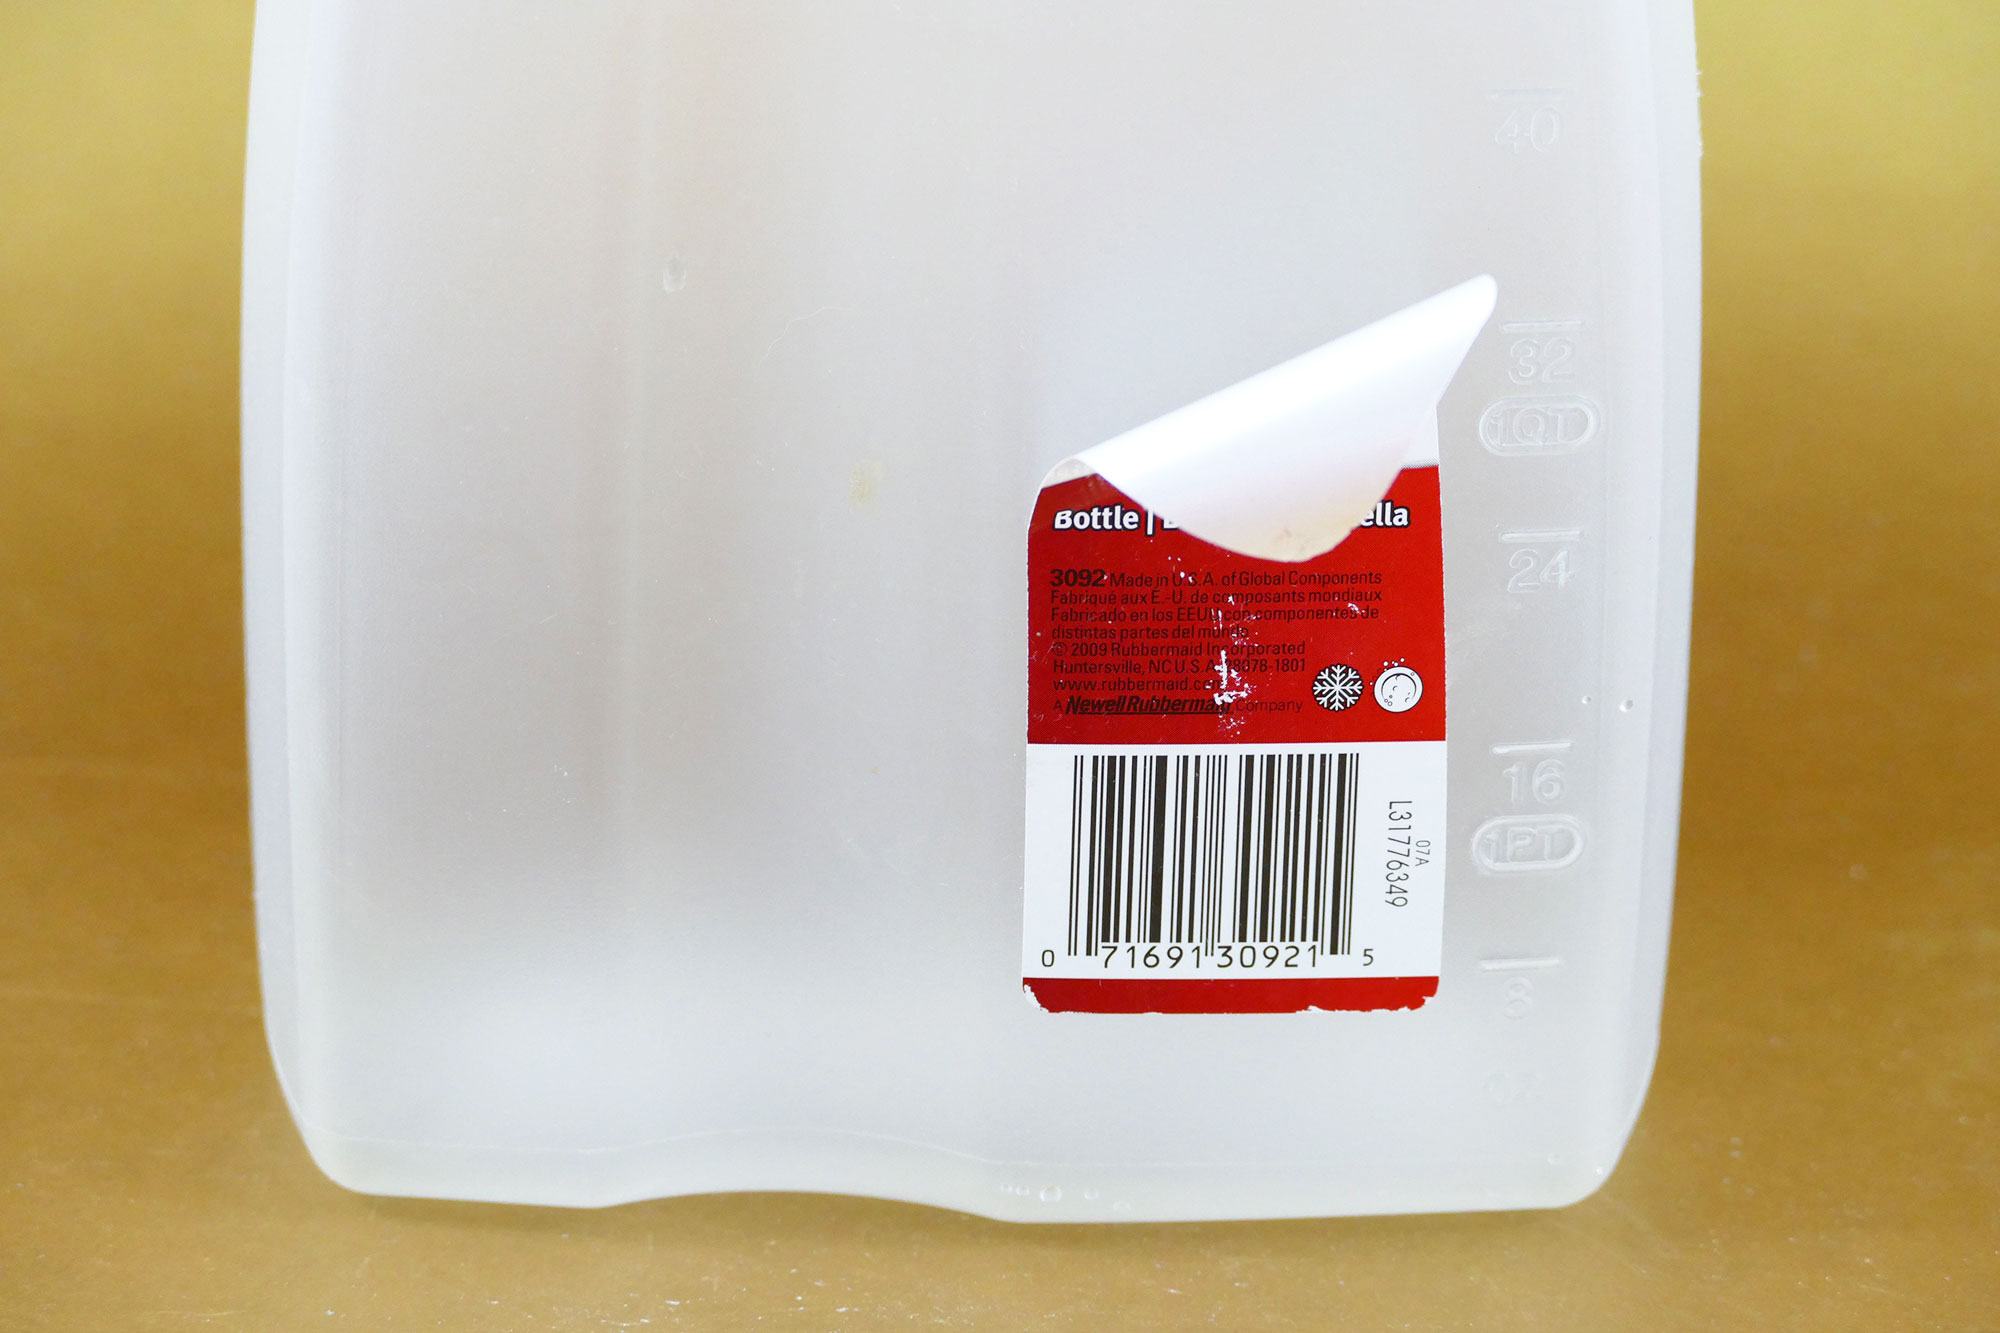 https://jennifermaker.com/wp-content/uploads/2017/01/diy-water-tracker-bottle-label-1.jpg